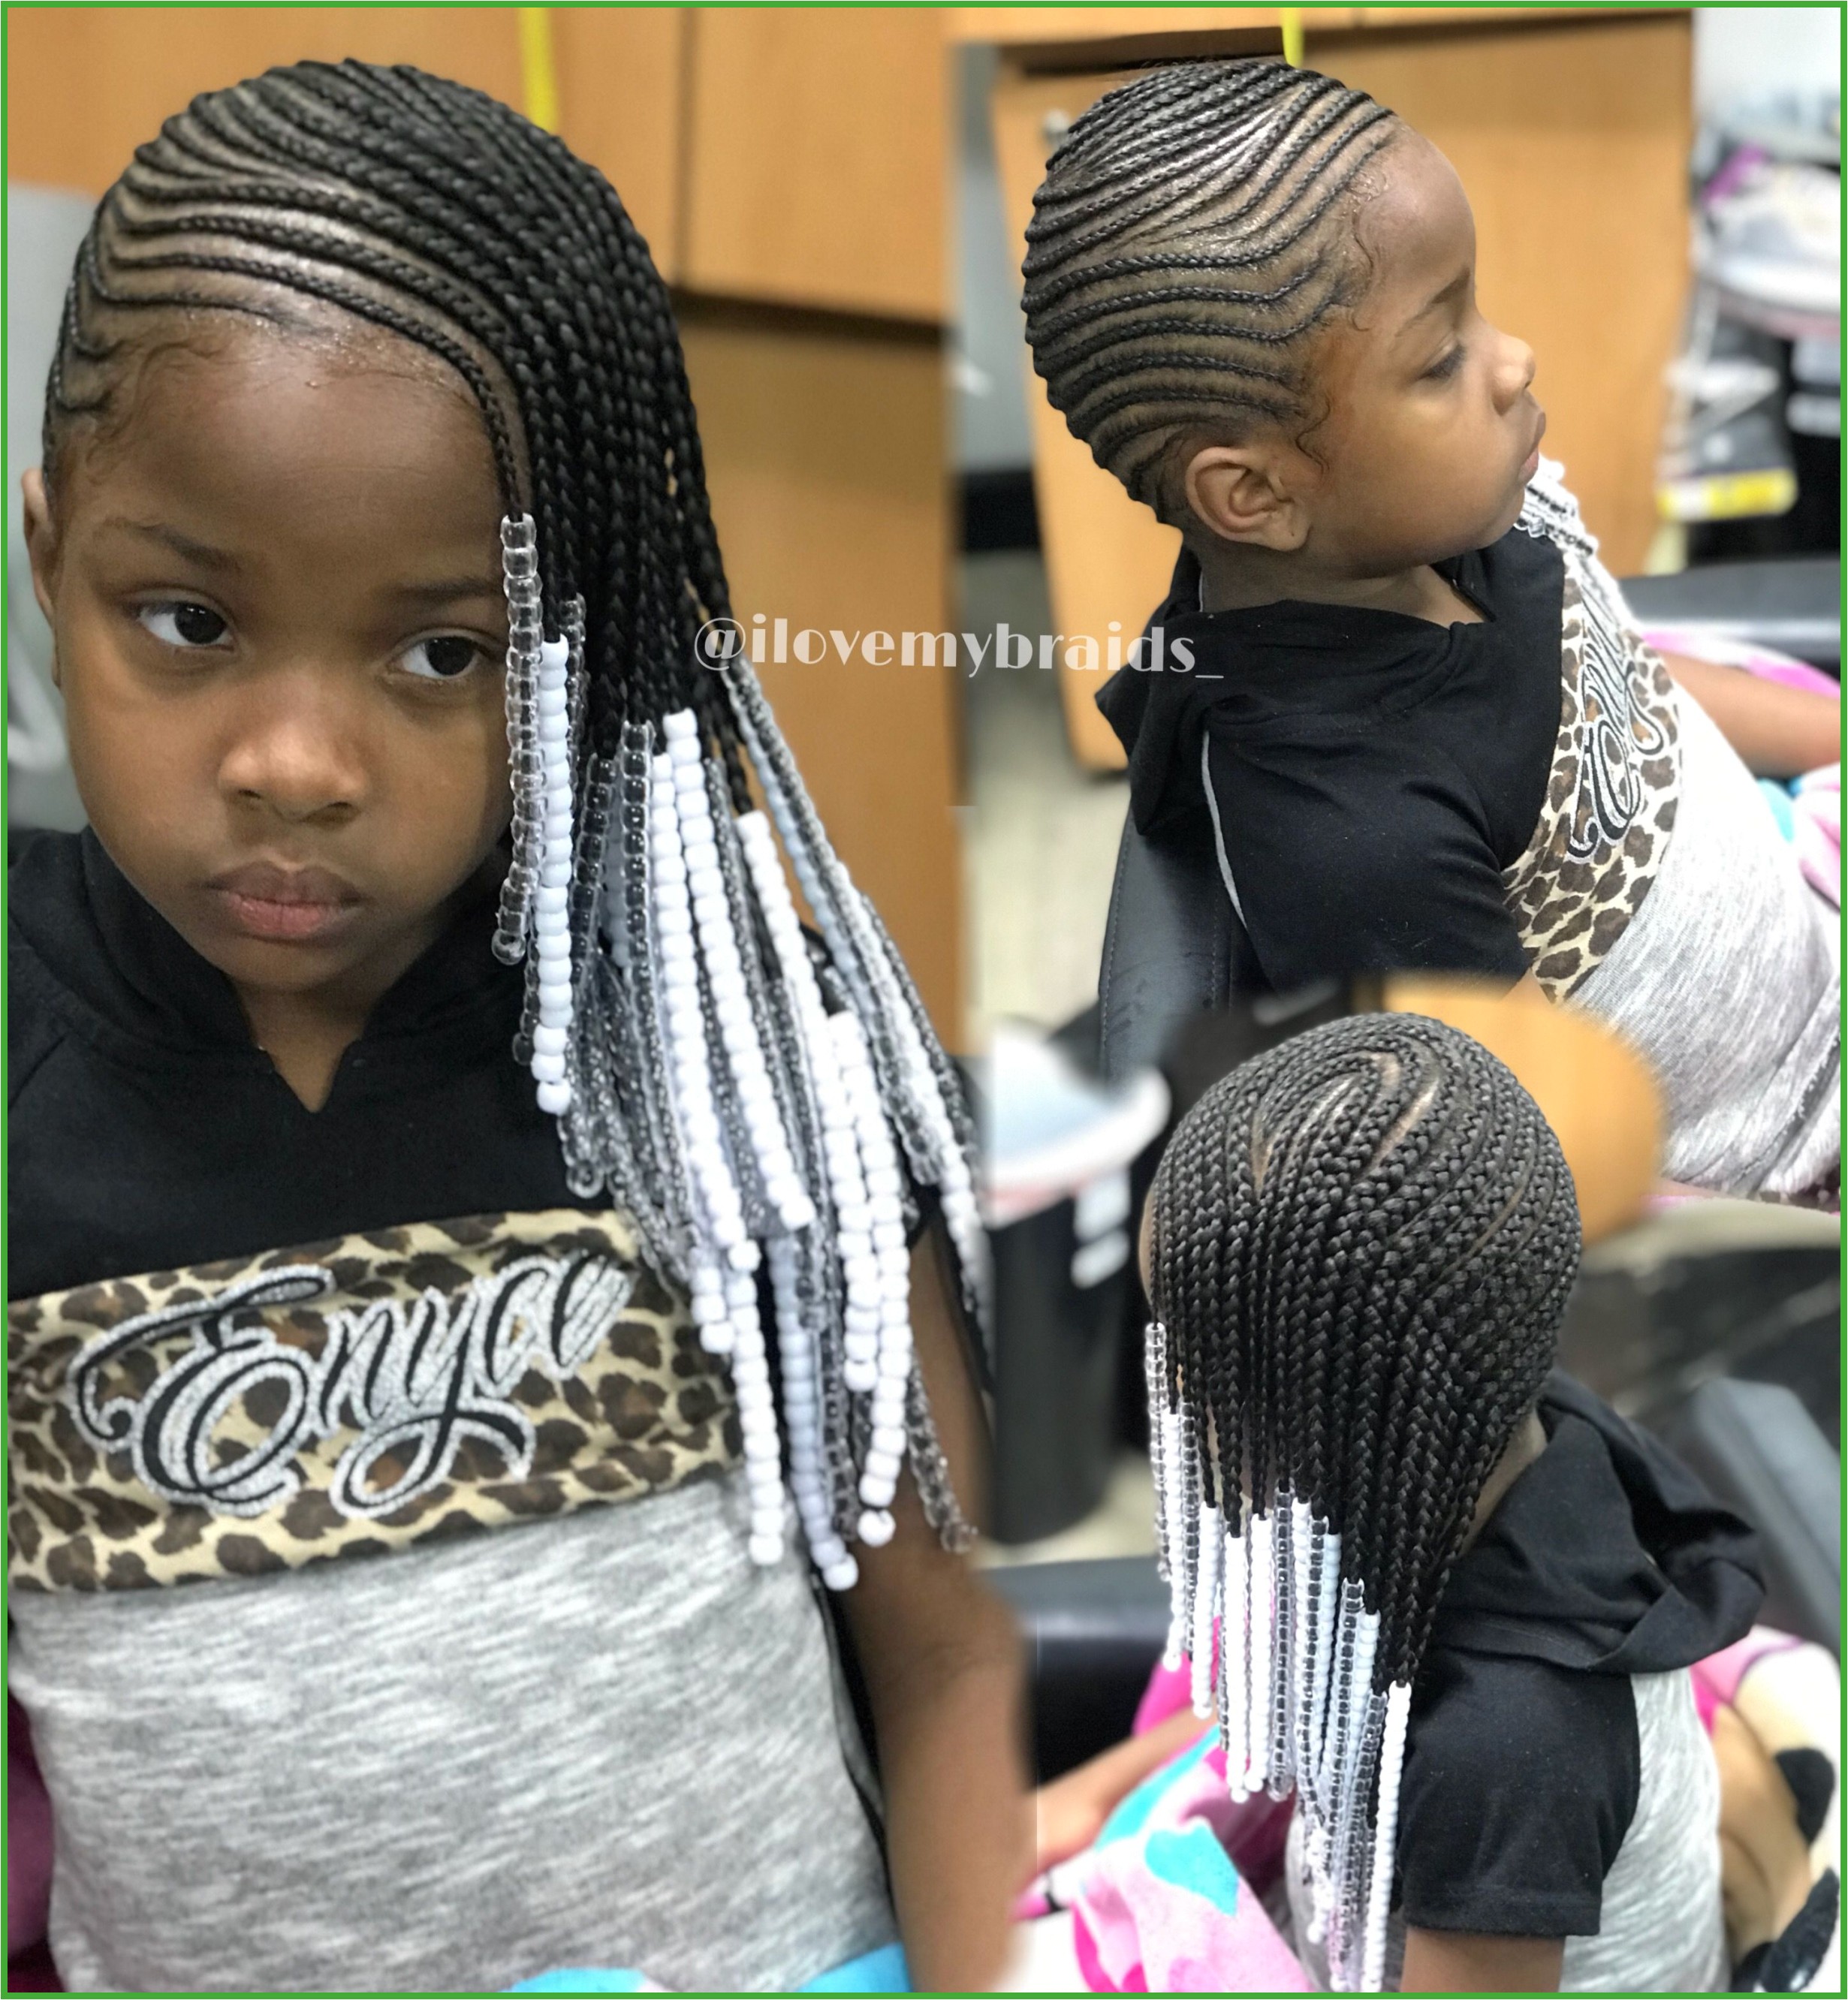 Braid Hairstyles for Little Girls orlandostylist orlandobraids Kidsbraids Ilovemybraids